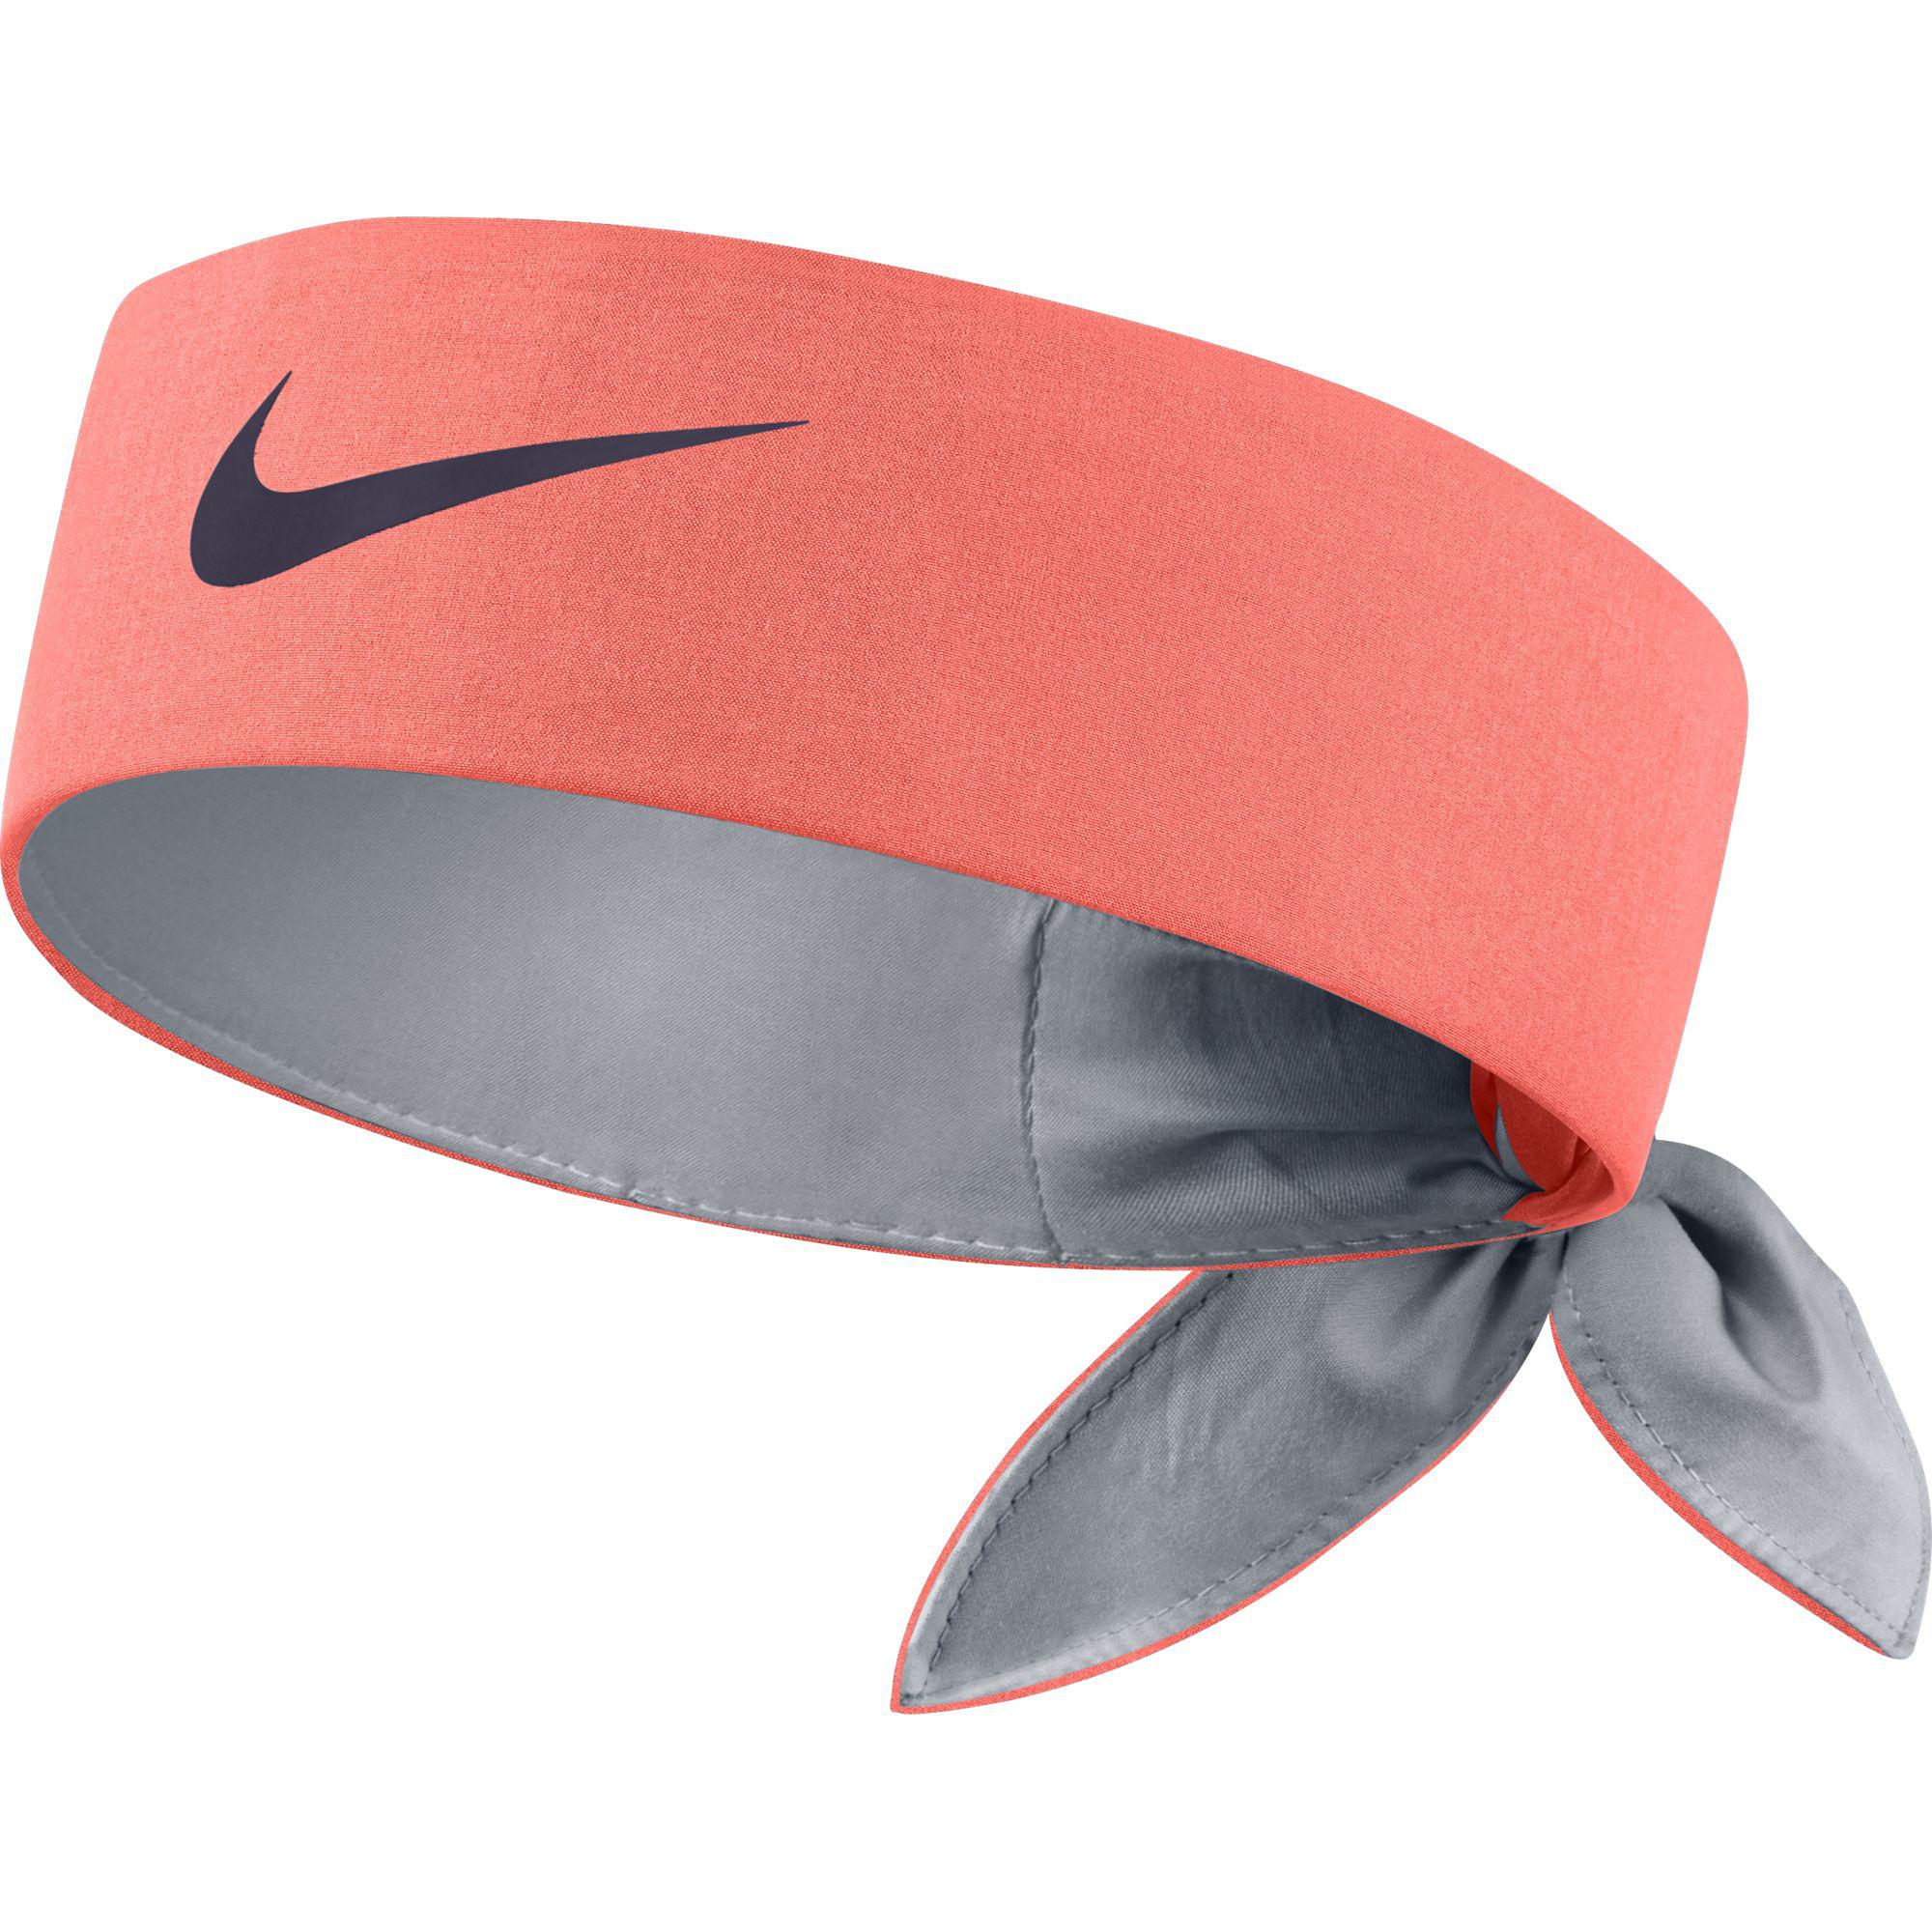 Nike Tennis Headband - Bright Mango Orange - Tennisnuts.com